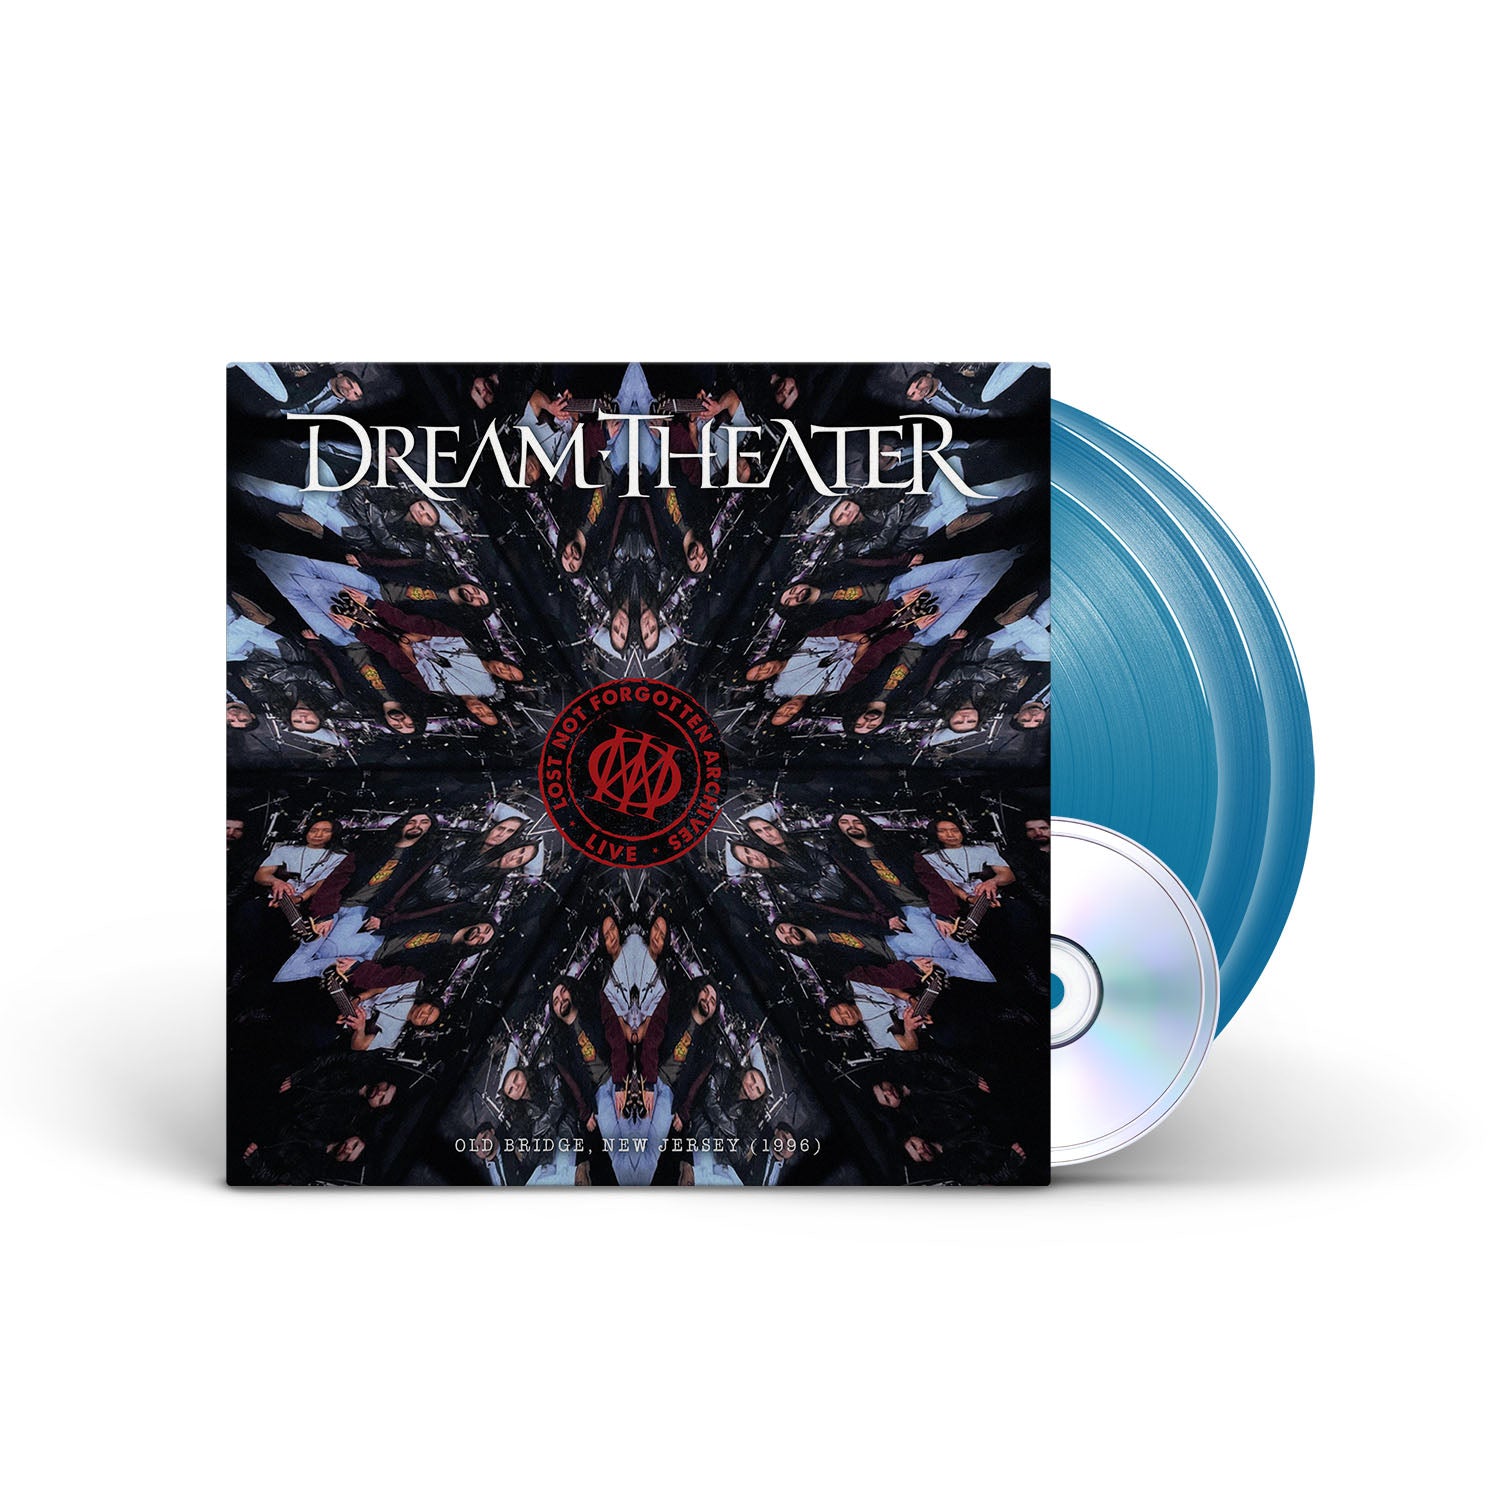 DREAM THEATER - Lost Not Forgotten Archives: Old Bridge, New Jersey (1996) - Translucent Sea Blue 3xLP+2CD